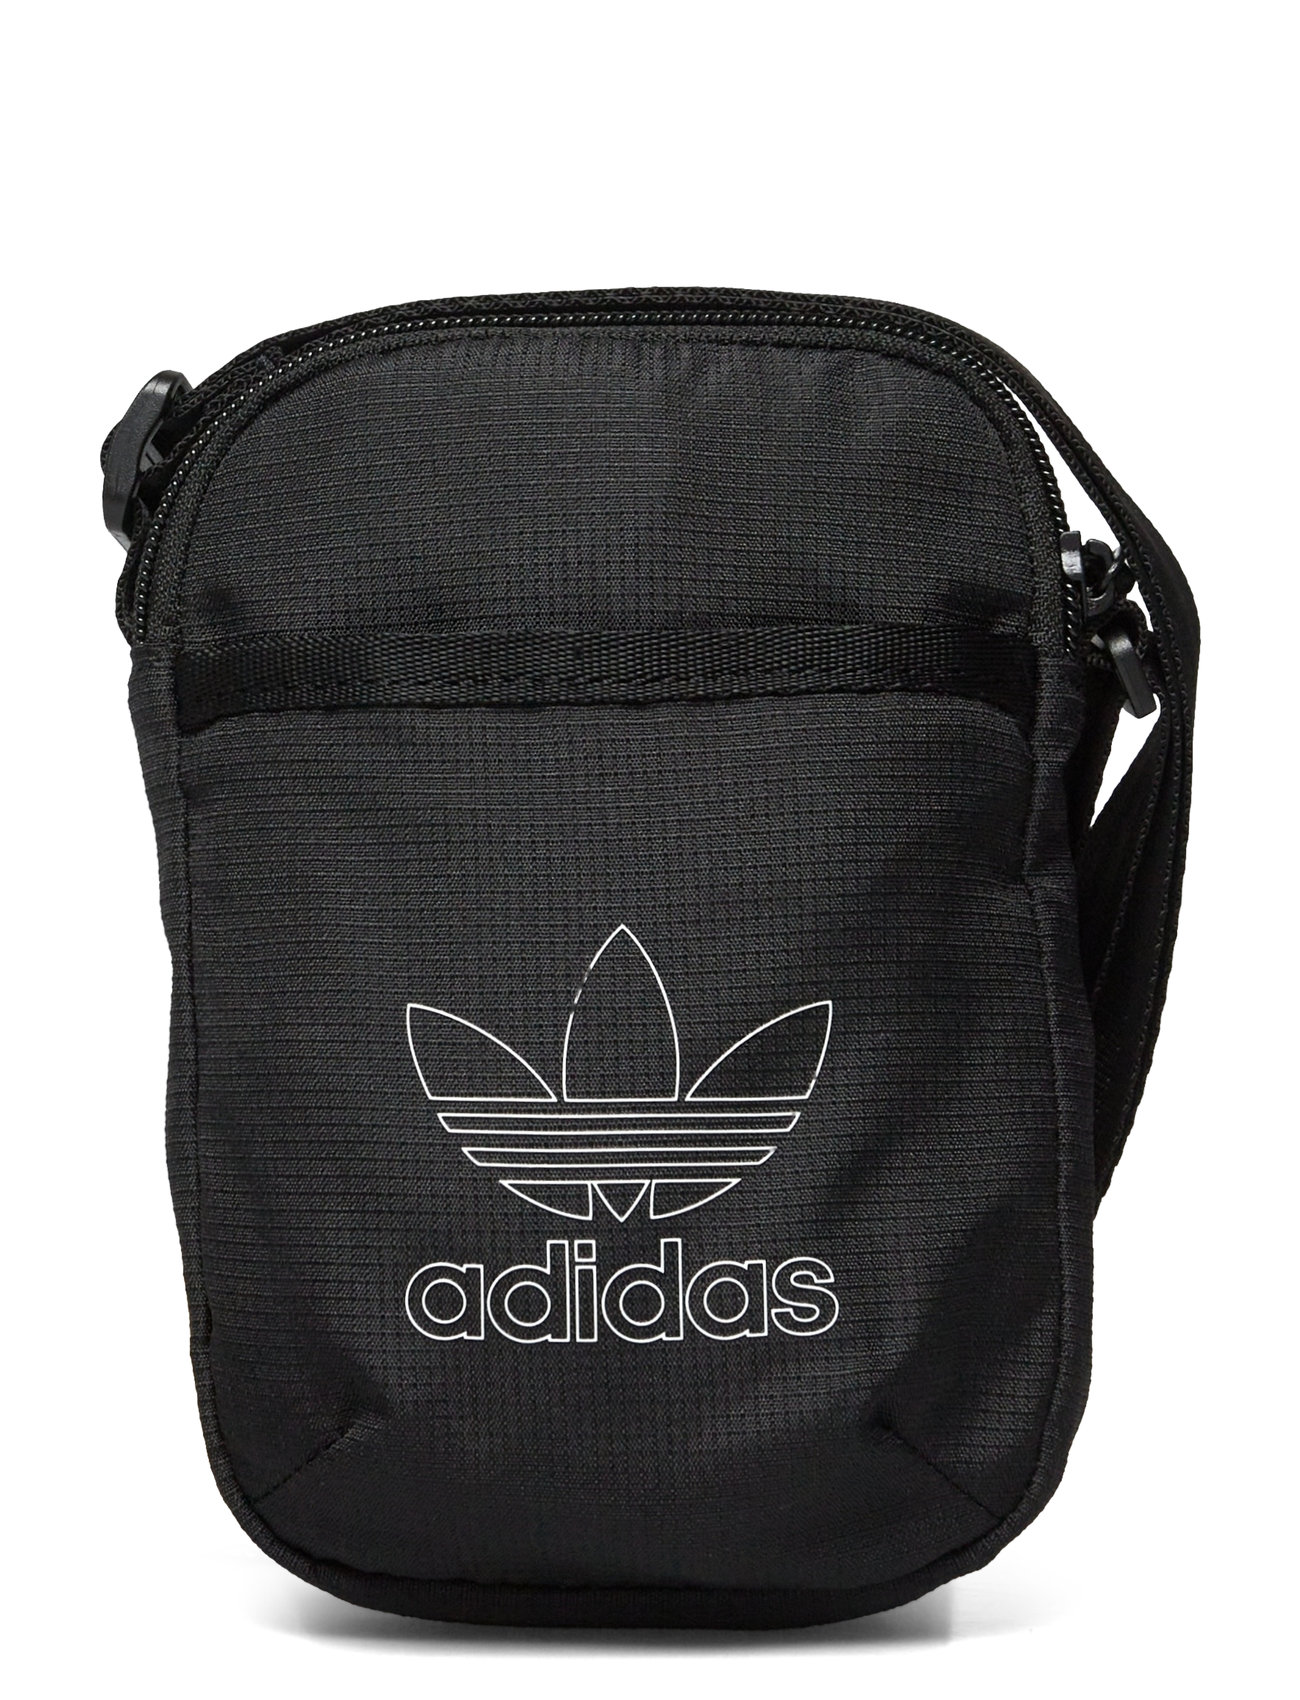 Adicolor Festival Bag Sport Bum Bags Black Adidas Originals